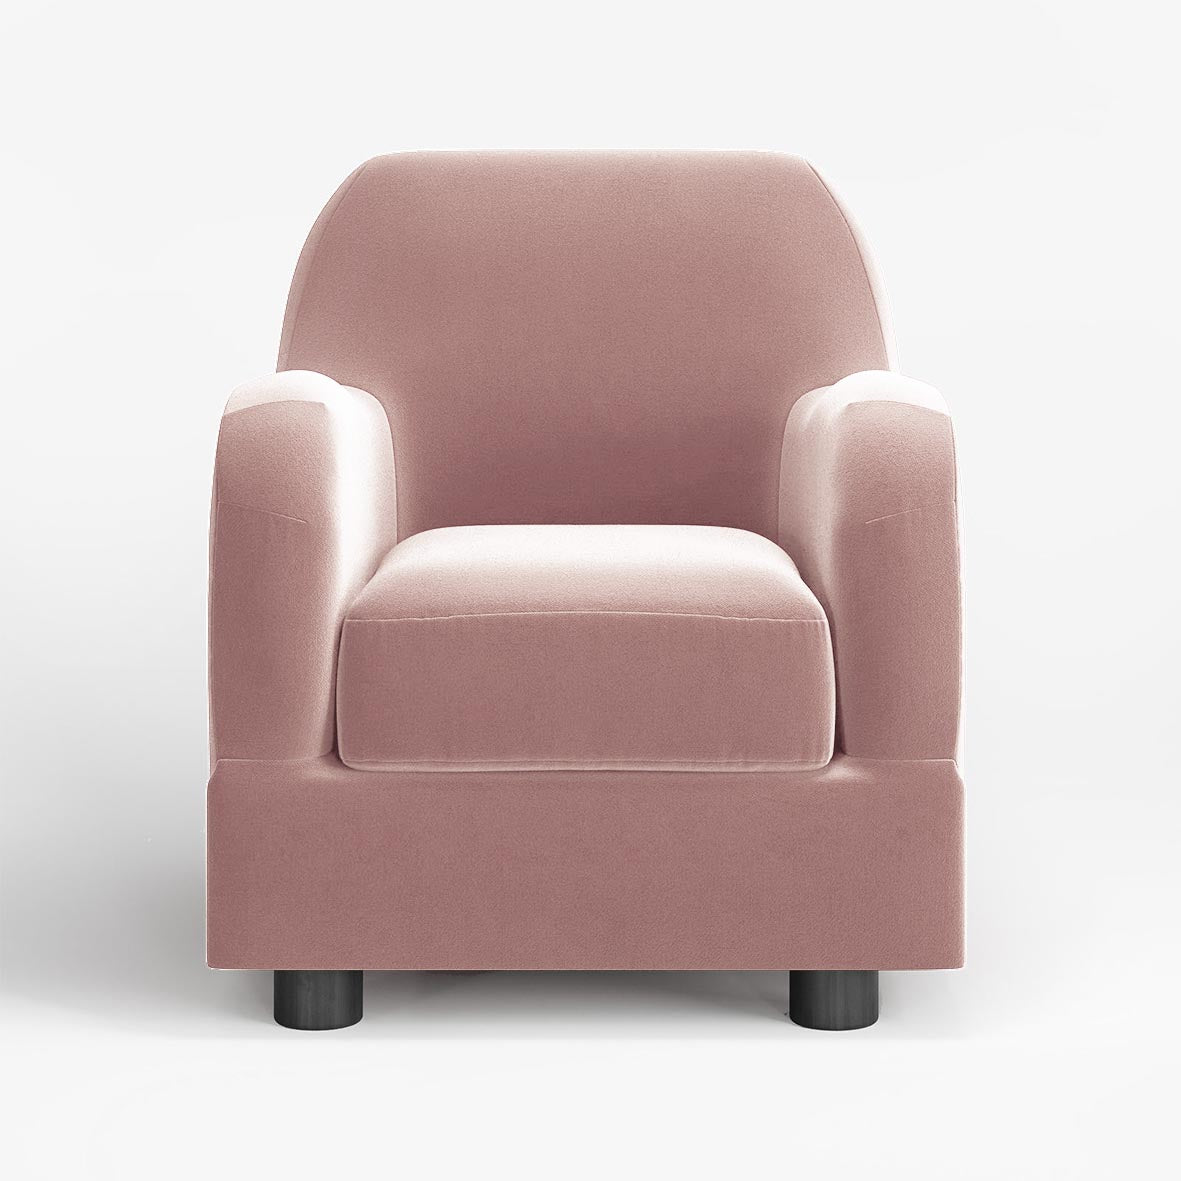 Luxury furniture, Plush Velvet Armchair, Contemporary Design, Modern Design, Made in England